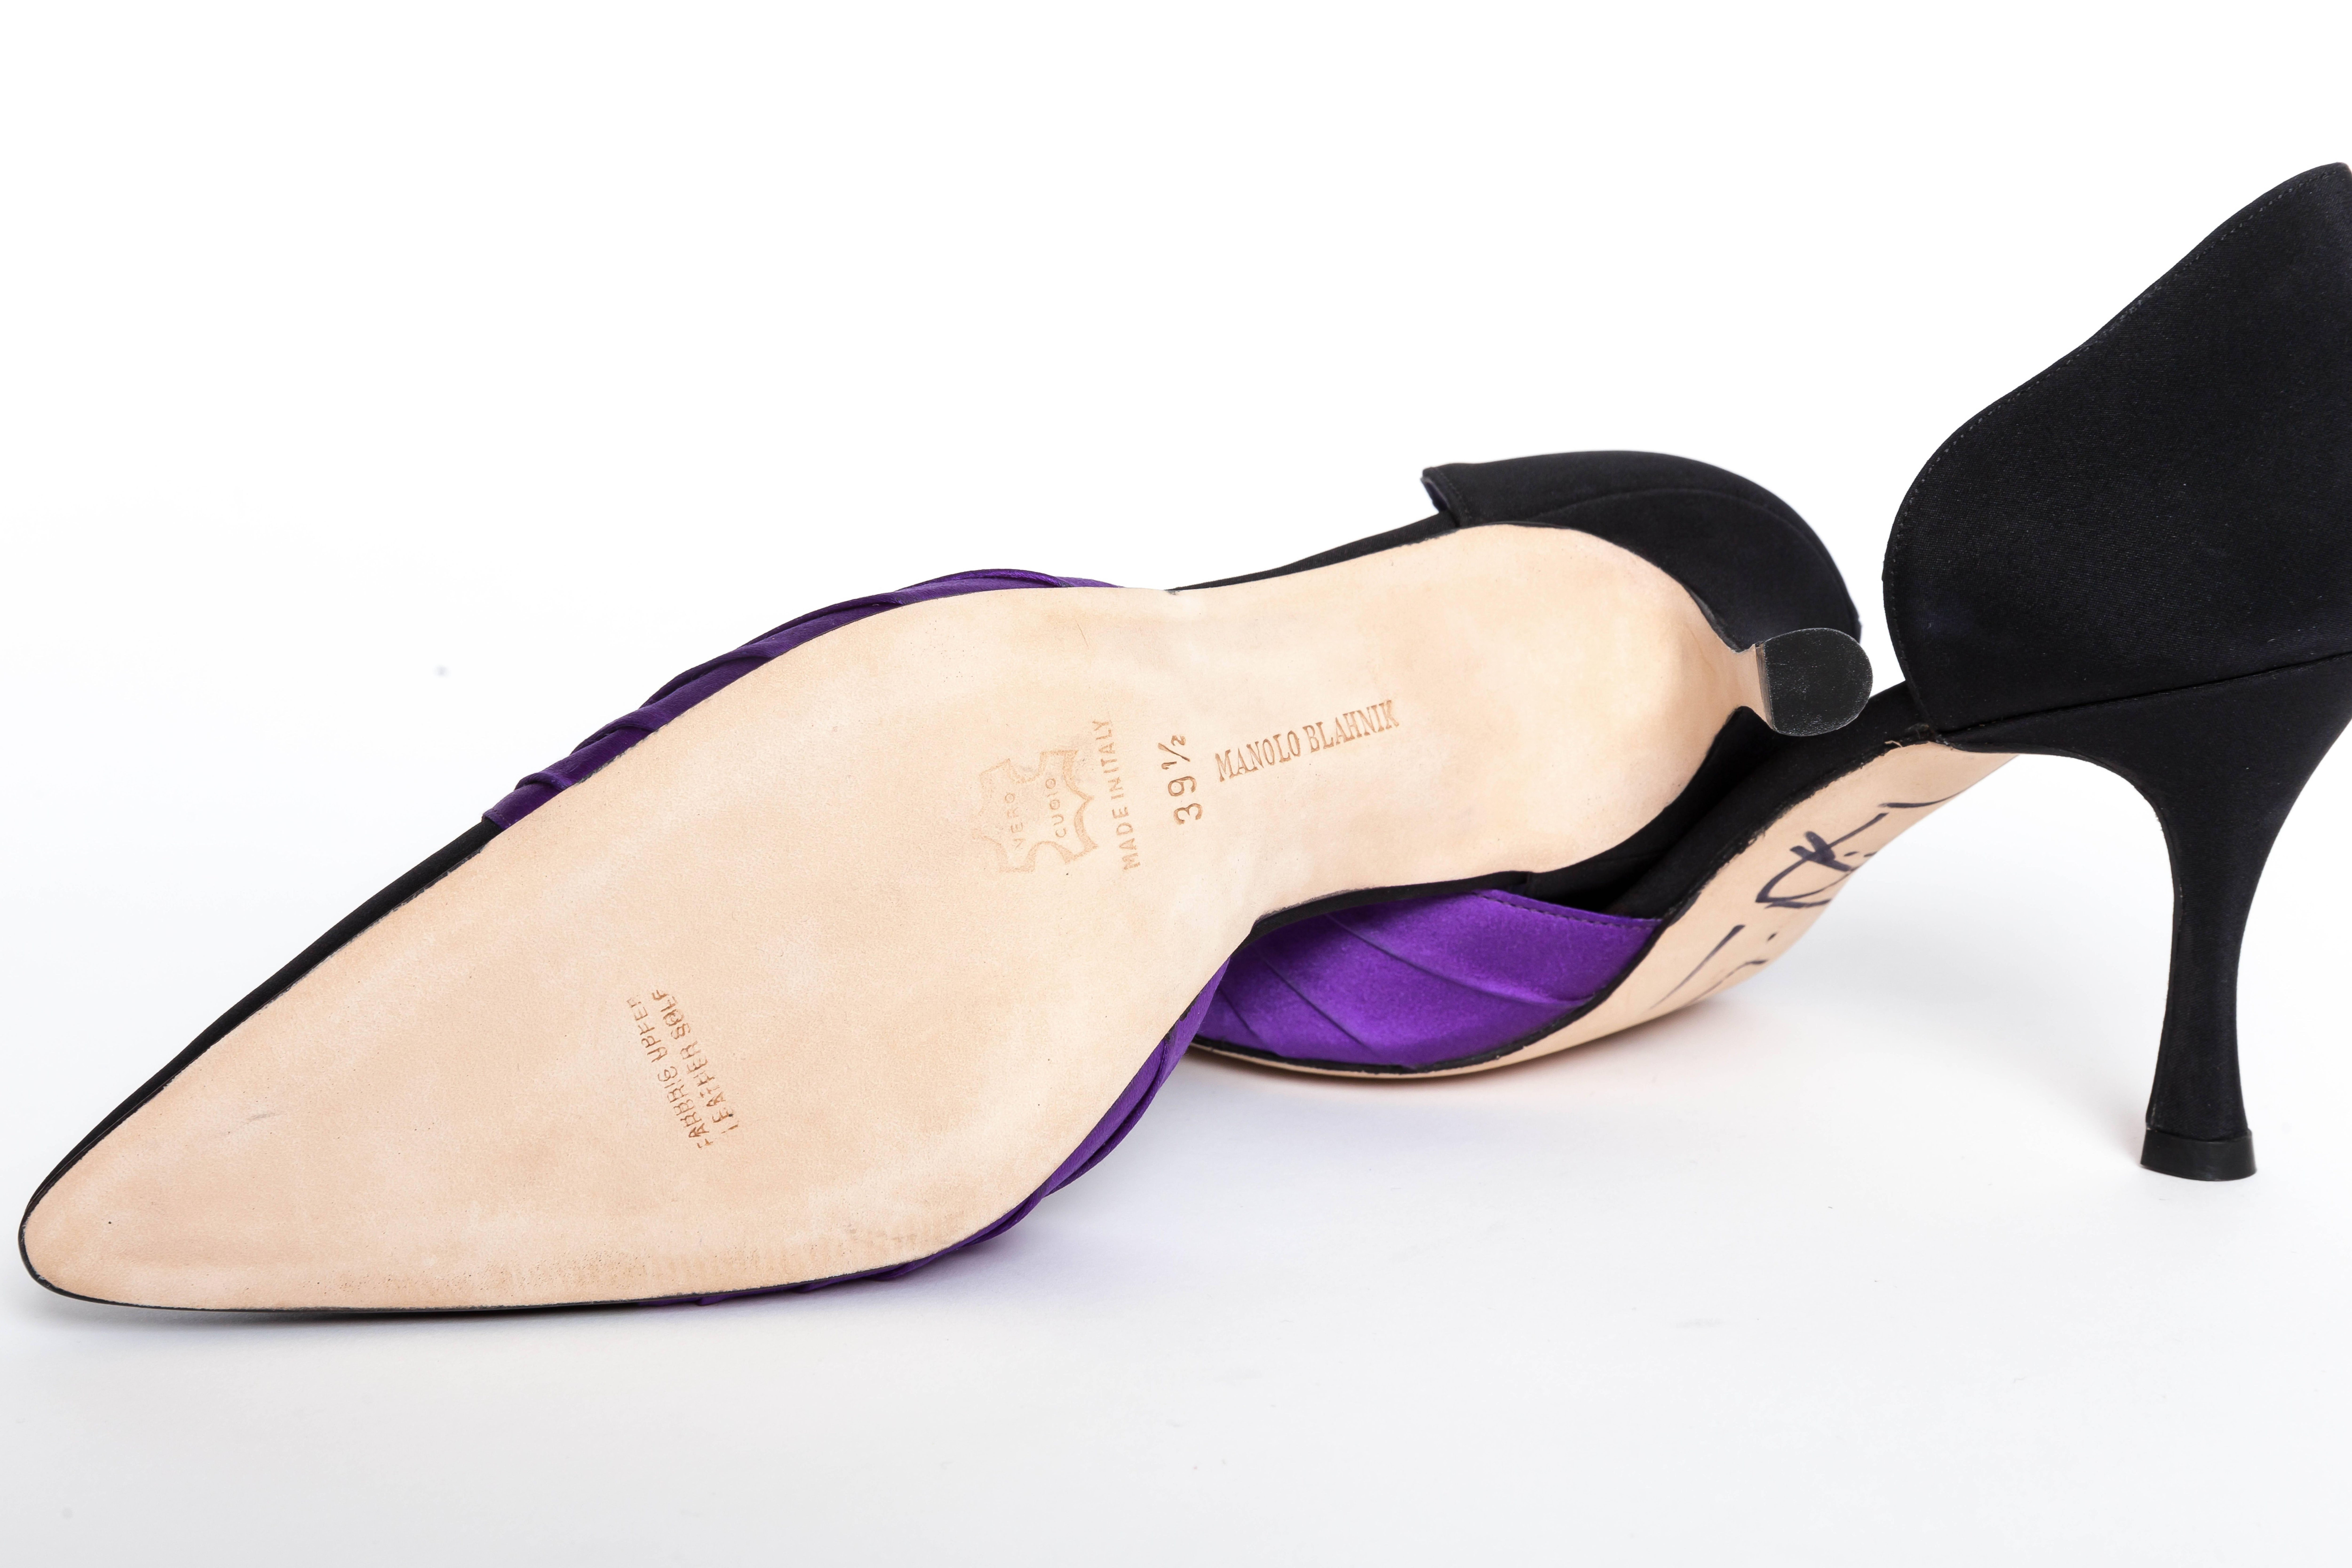 Purple Signed Couture Manolo Blahnik Pumps - 39.5 - New / Unworn